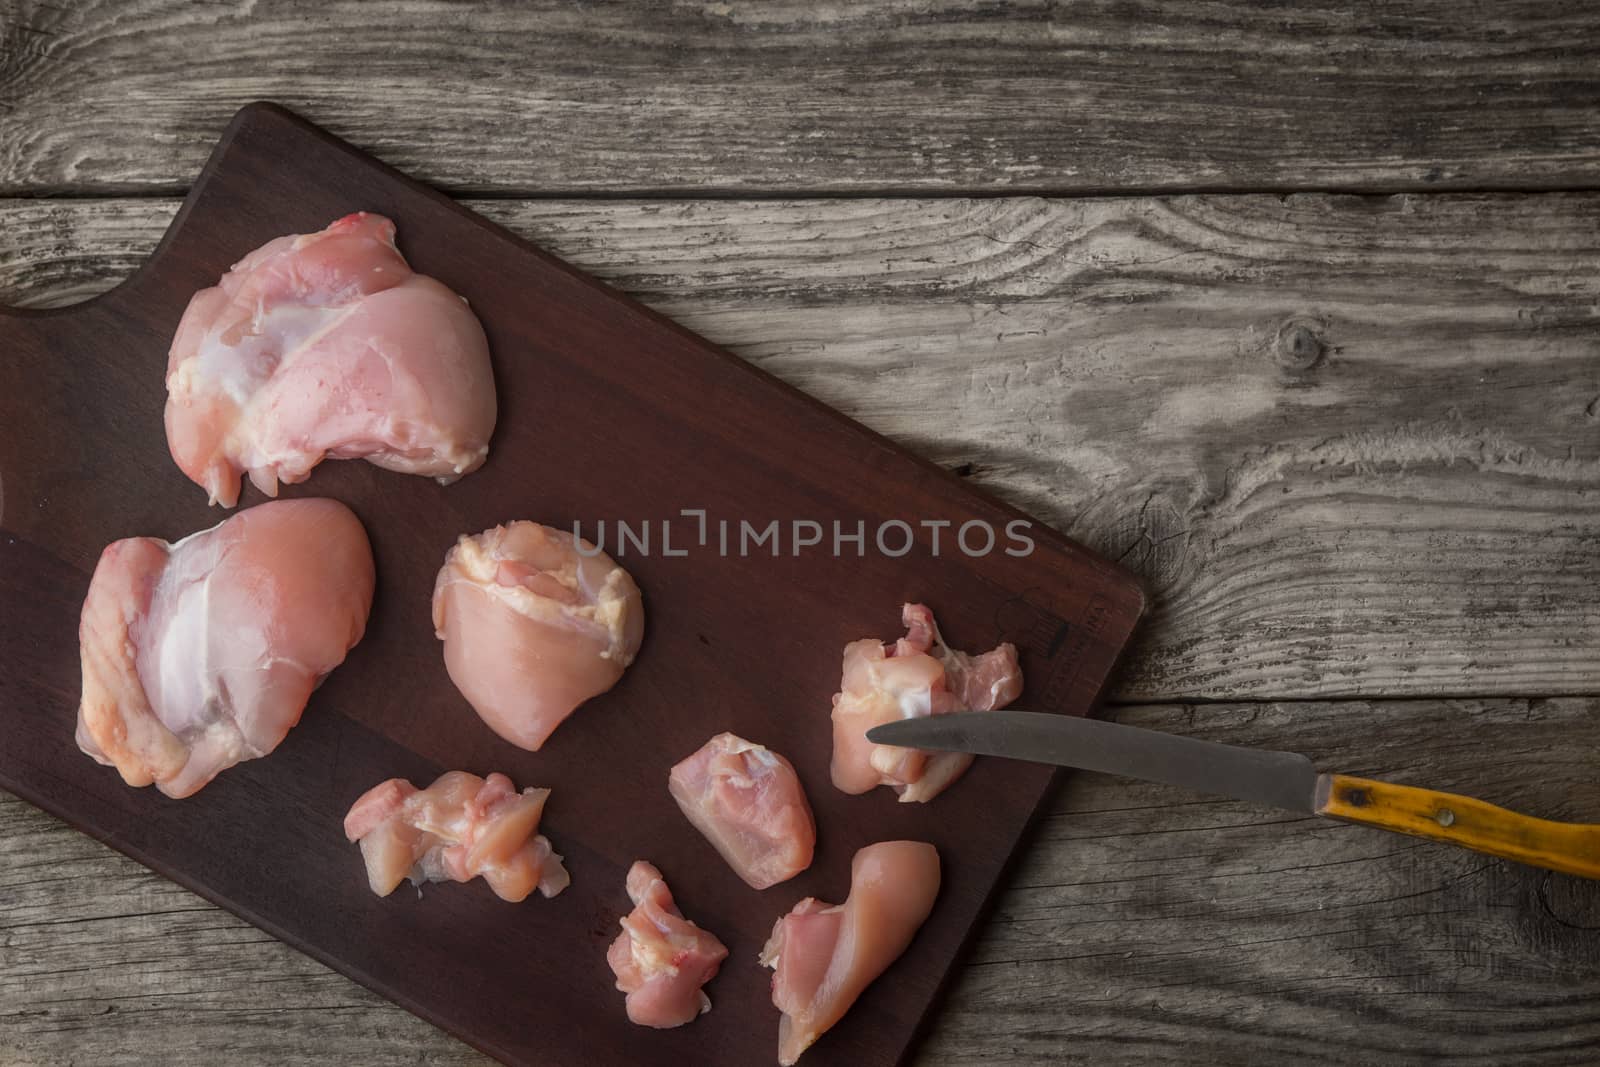 Raw chicken fillet on the wooden board top view by Deniskarpenkov